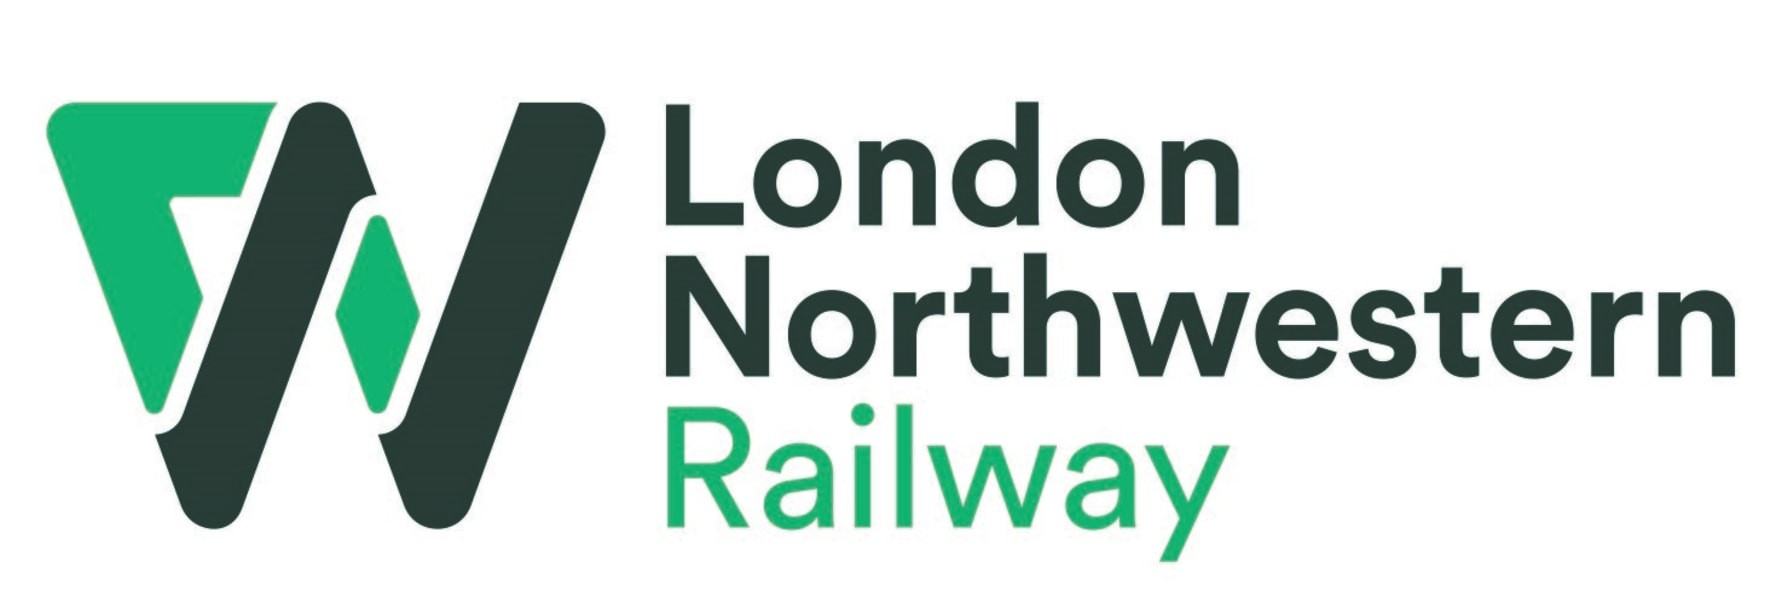 London Northwestern Railway invites customers to help improve services